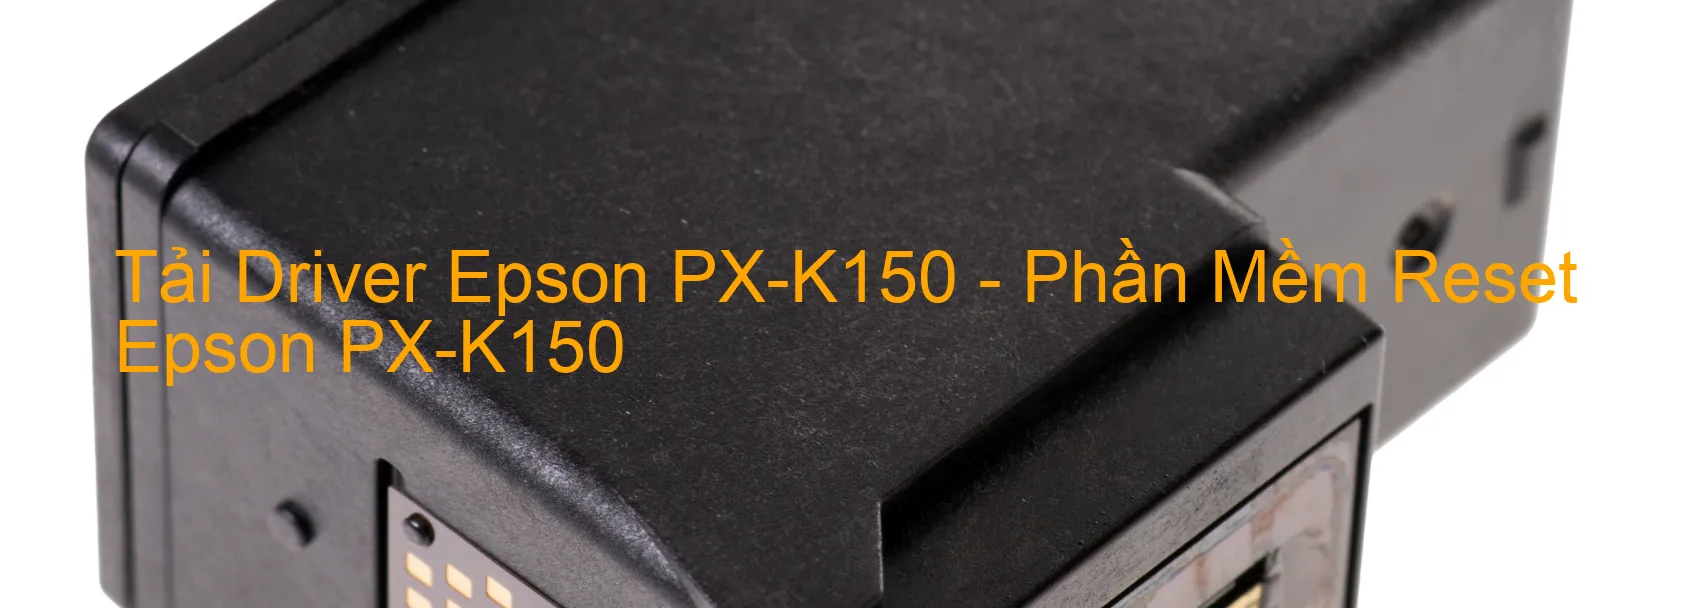 Driver Epson PX-K150, Phần Mềm Reset Epson PX-K150